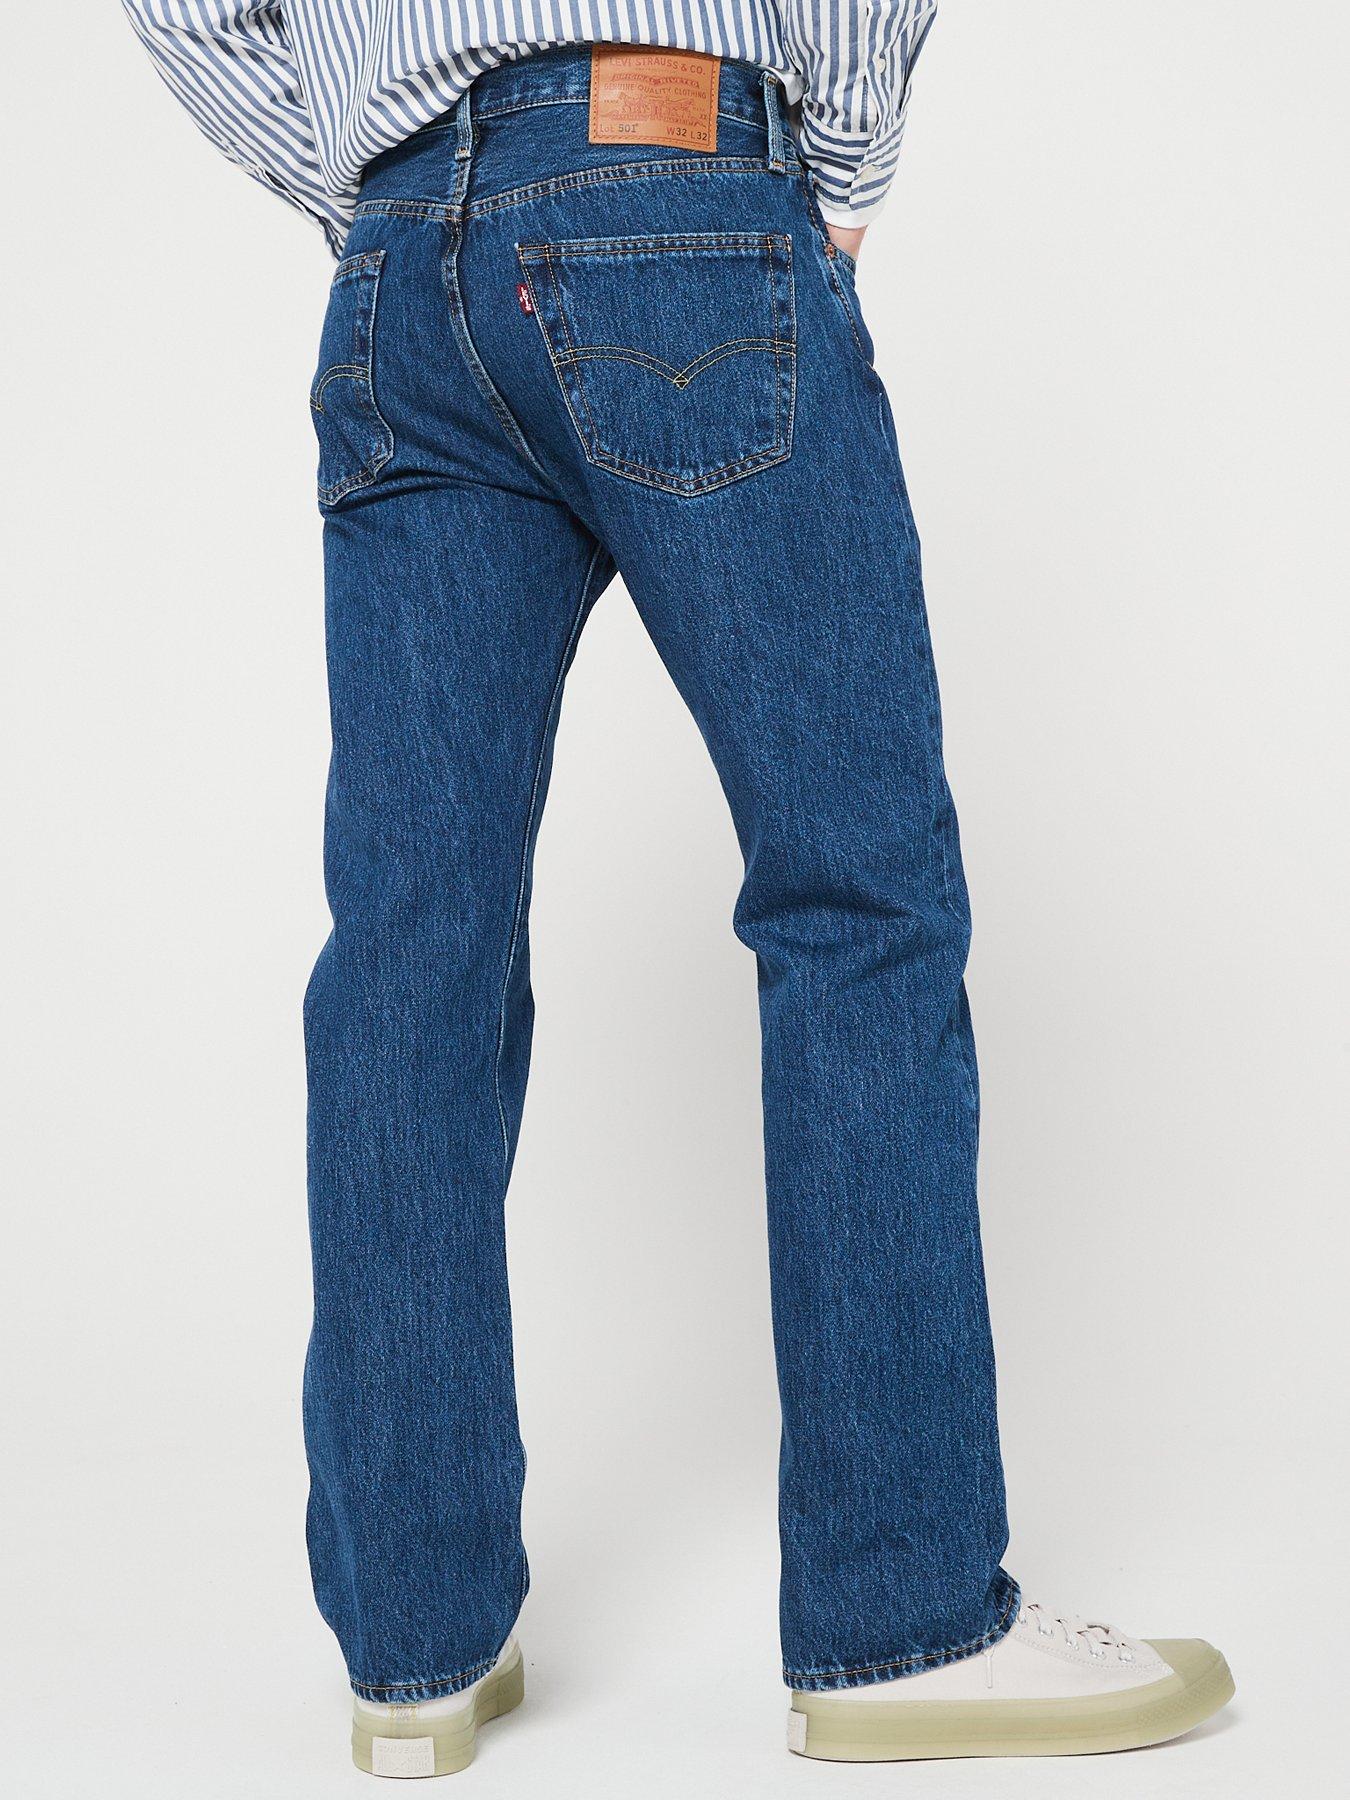 501 original fit jean